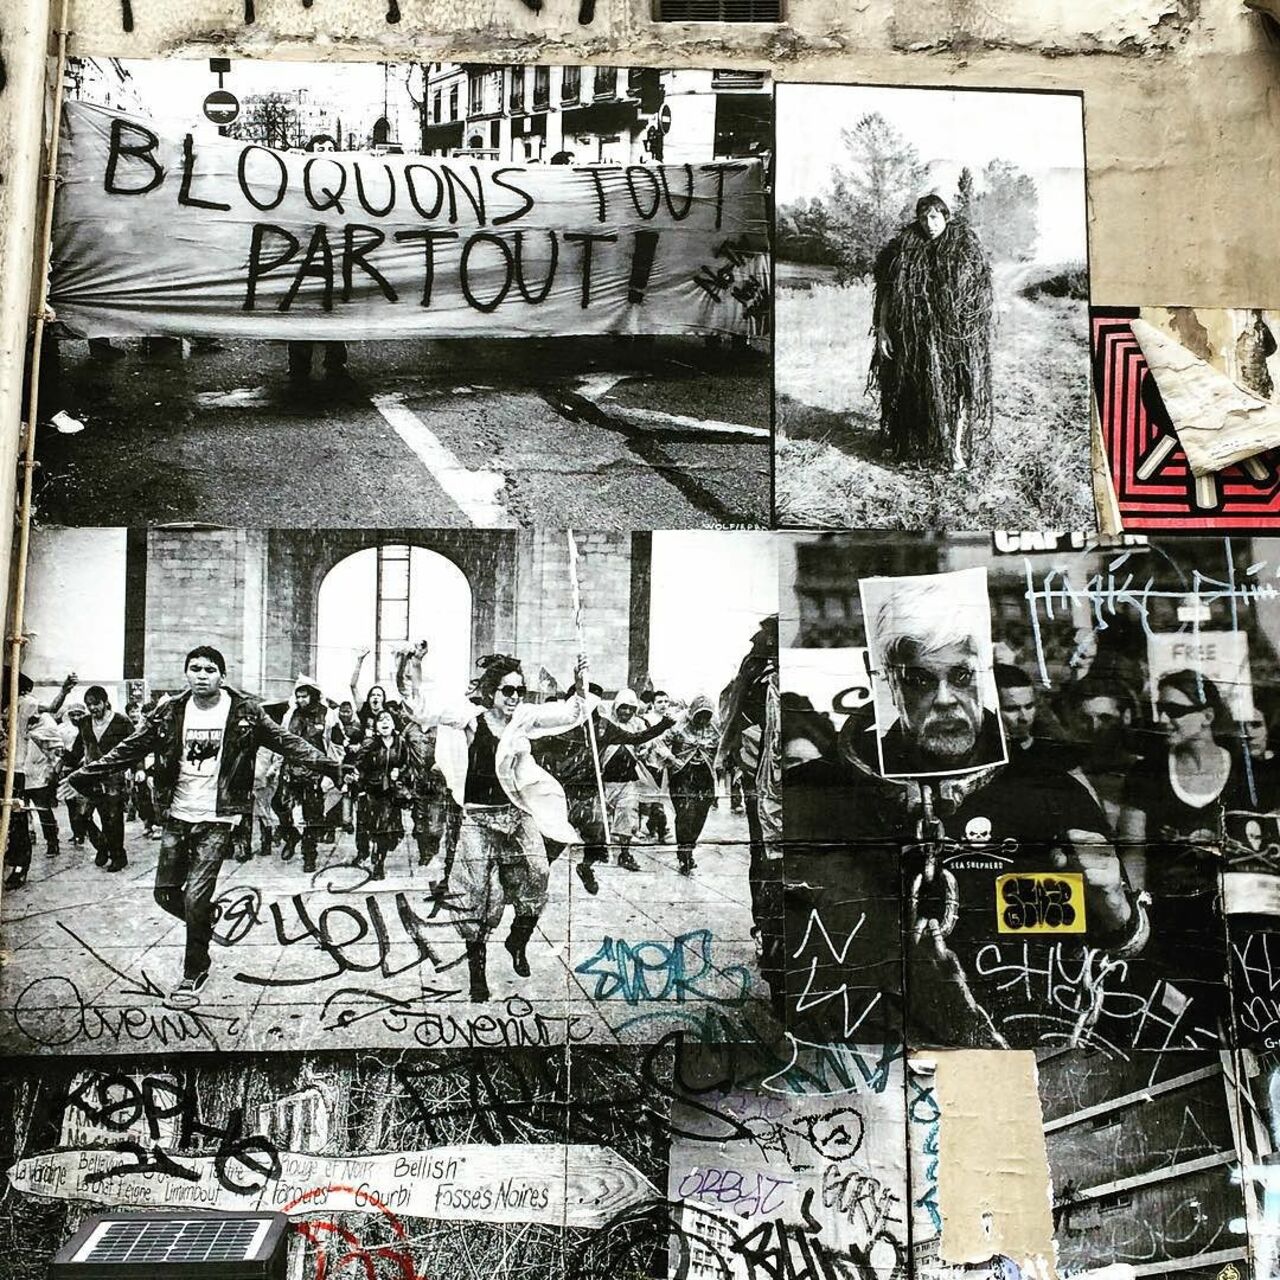 #Paris #graffiti photo by @elricoelmagnifico http://ift.tt/1PIXNEF #StreetArt https://t.co/hHKzpmE5tE